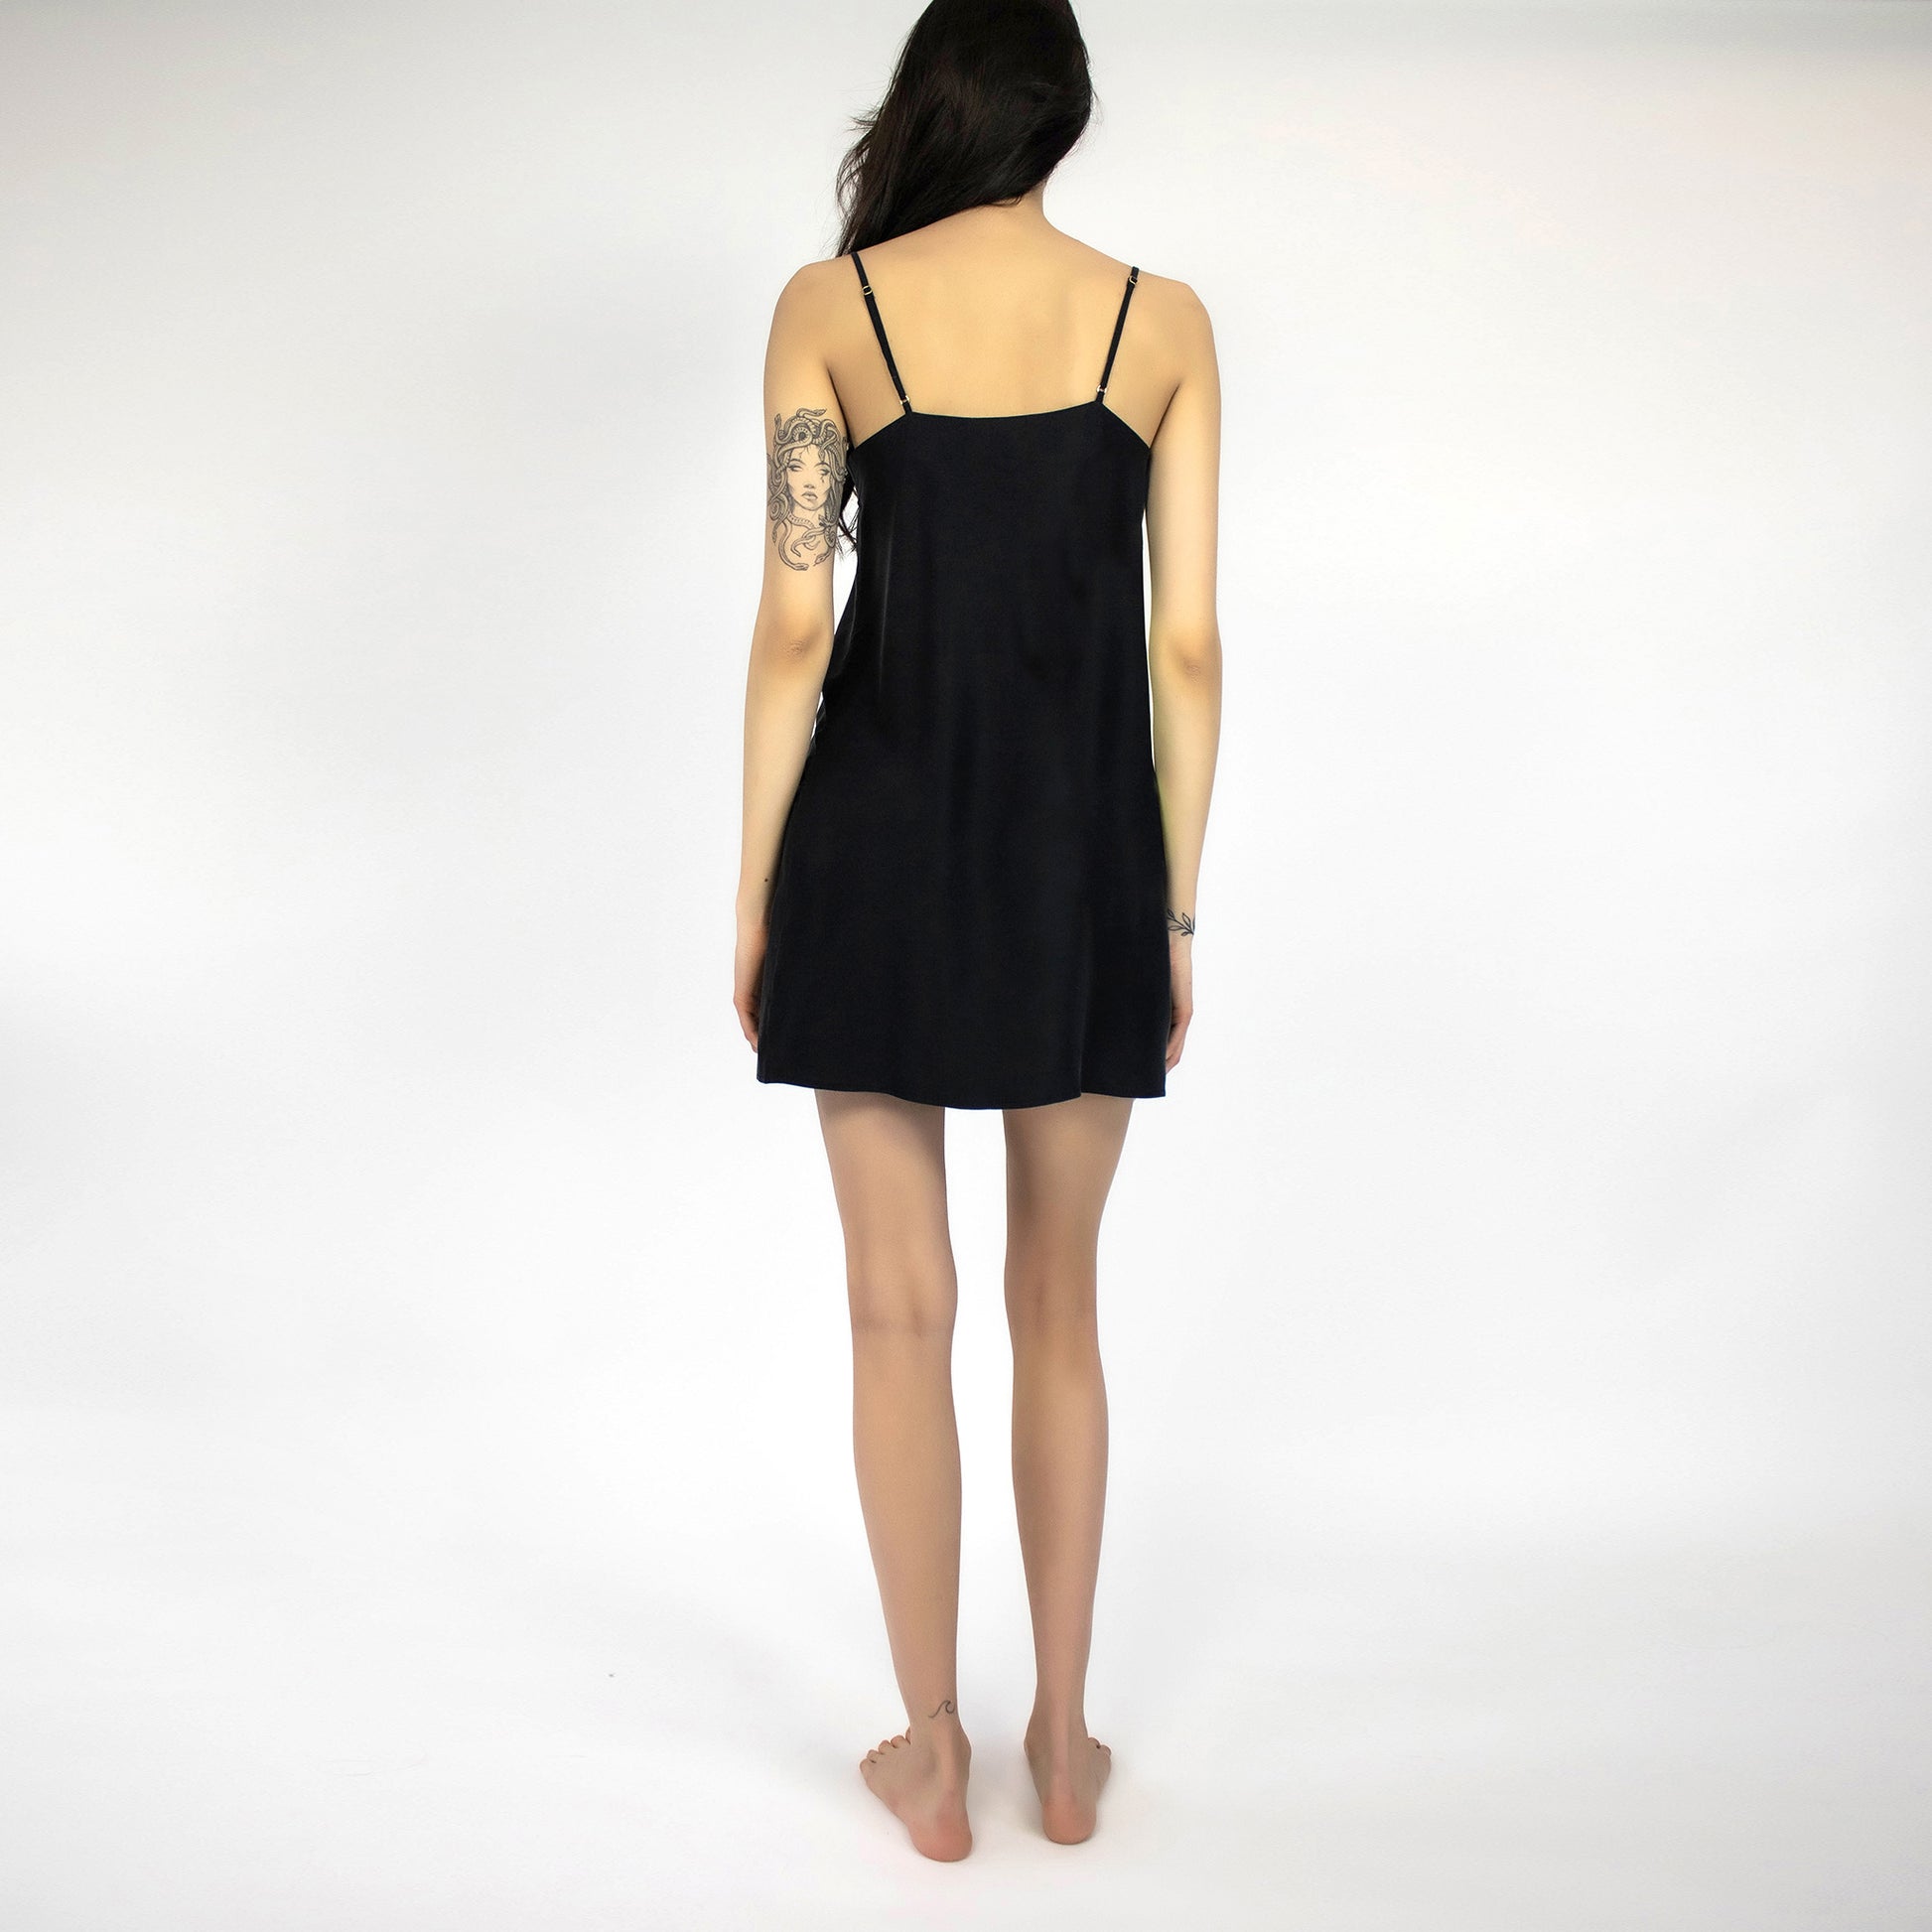 Lady Silk Slip Dress short in blac colou by Nokaya